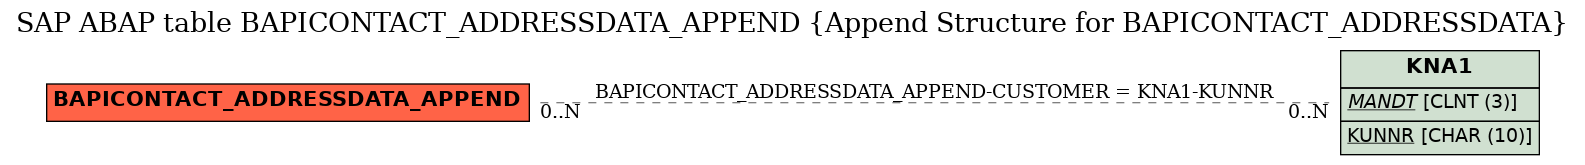 E-R Diagram for table BAPICONTACT_ADDRESSDATA_APPEND (Append Structure for BAPICONTACT_ADDRESSDATA)